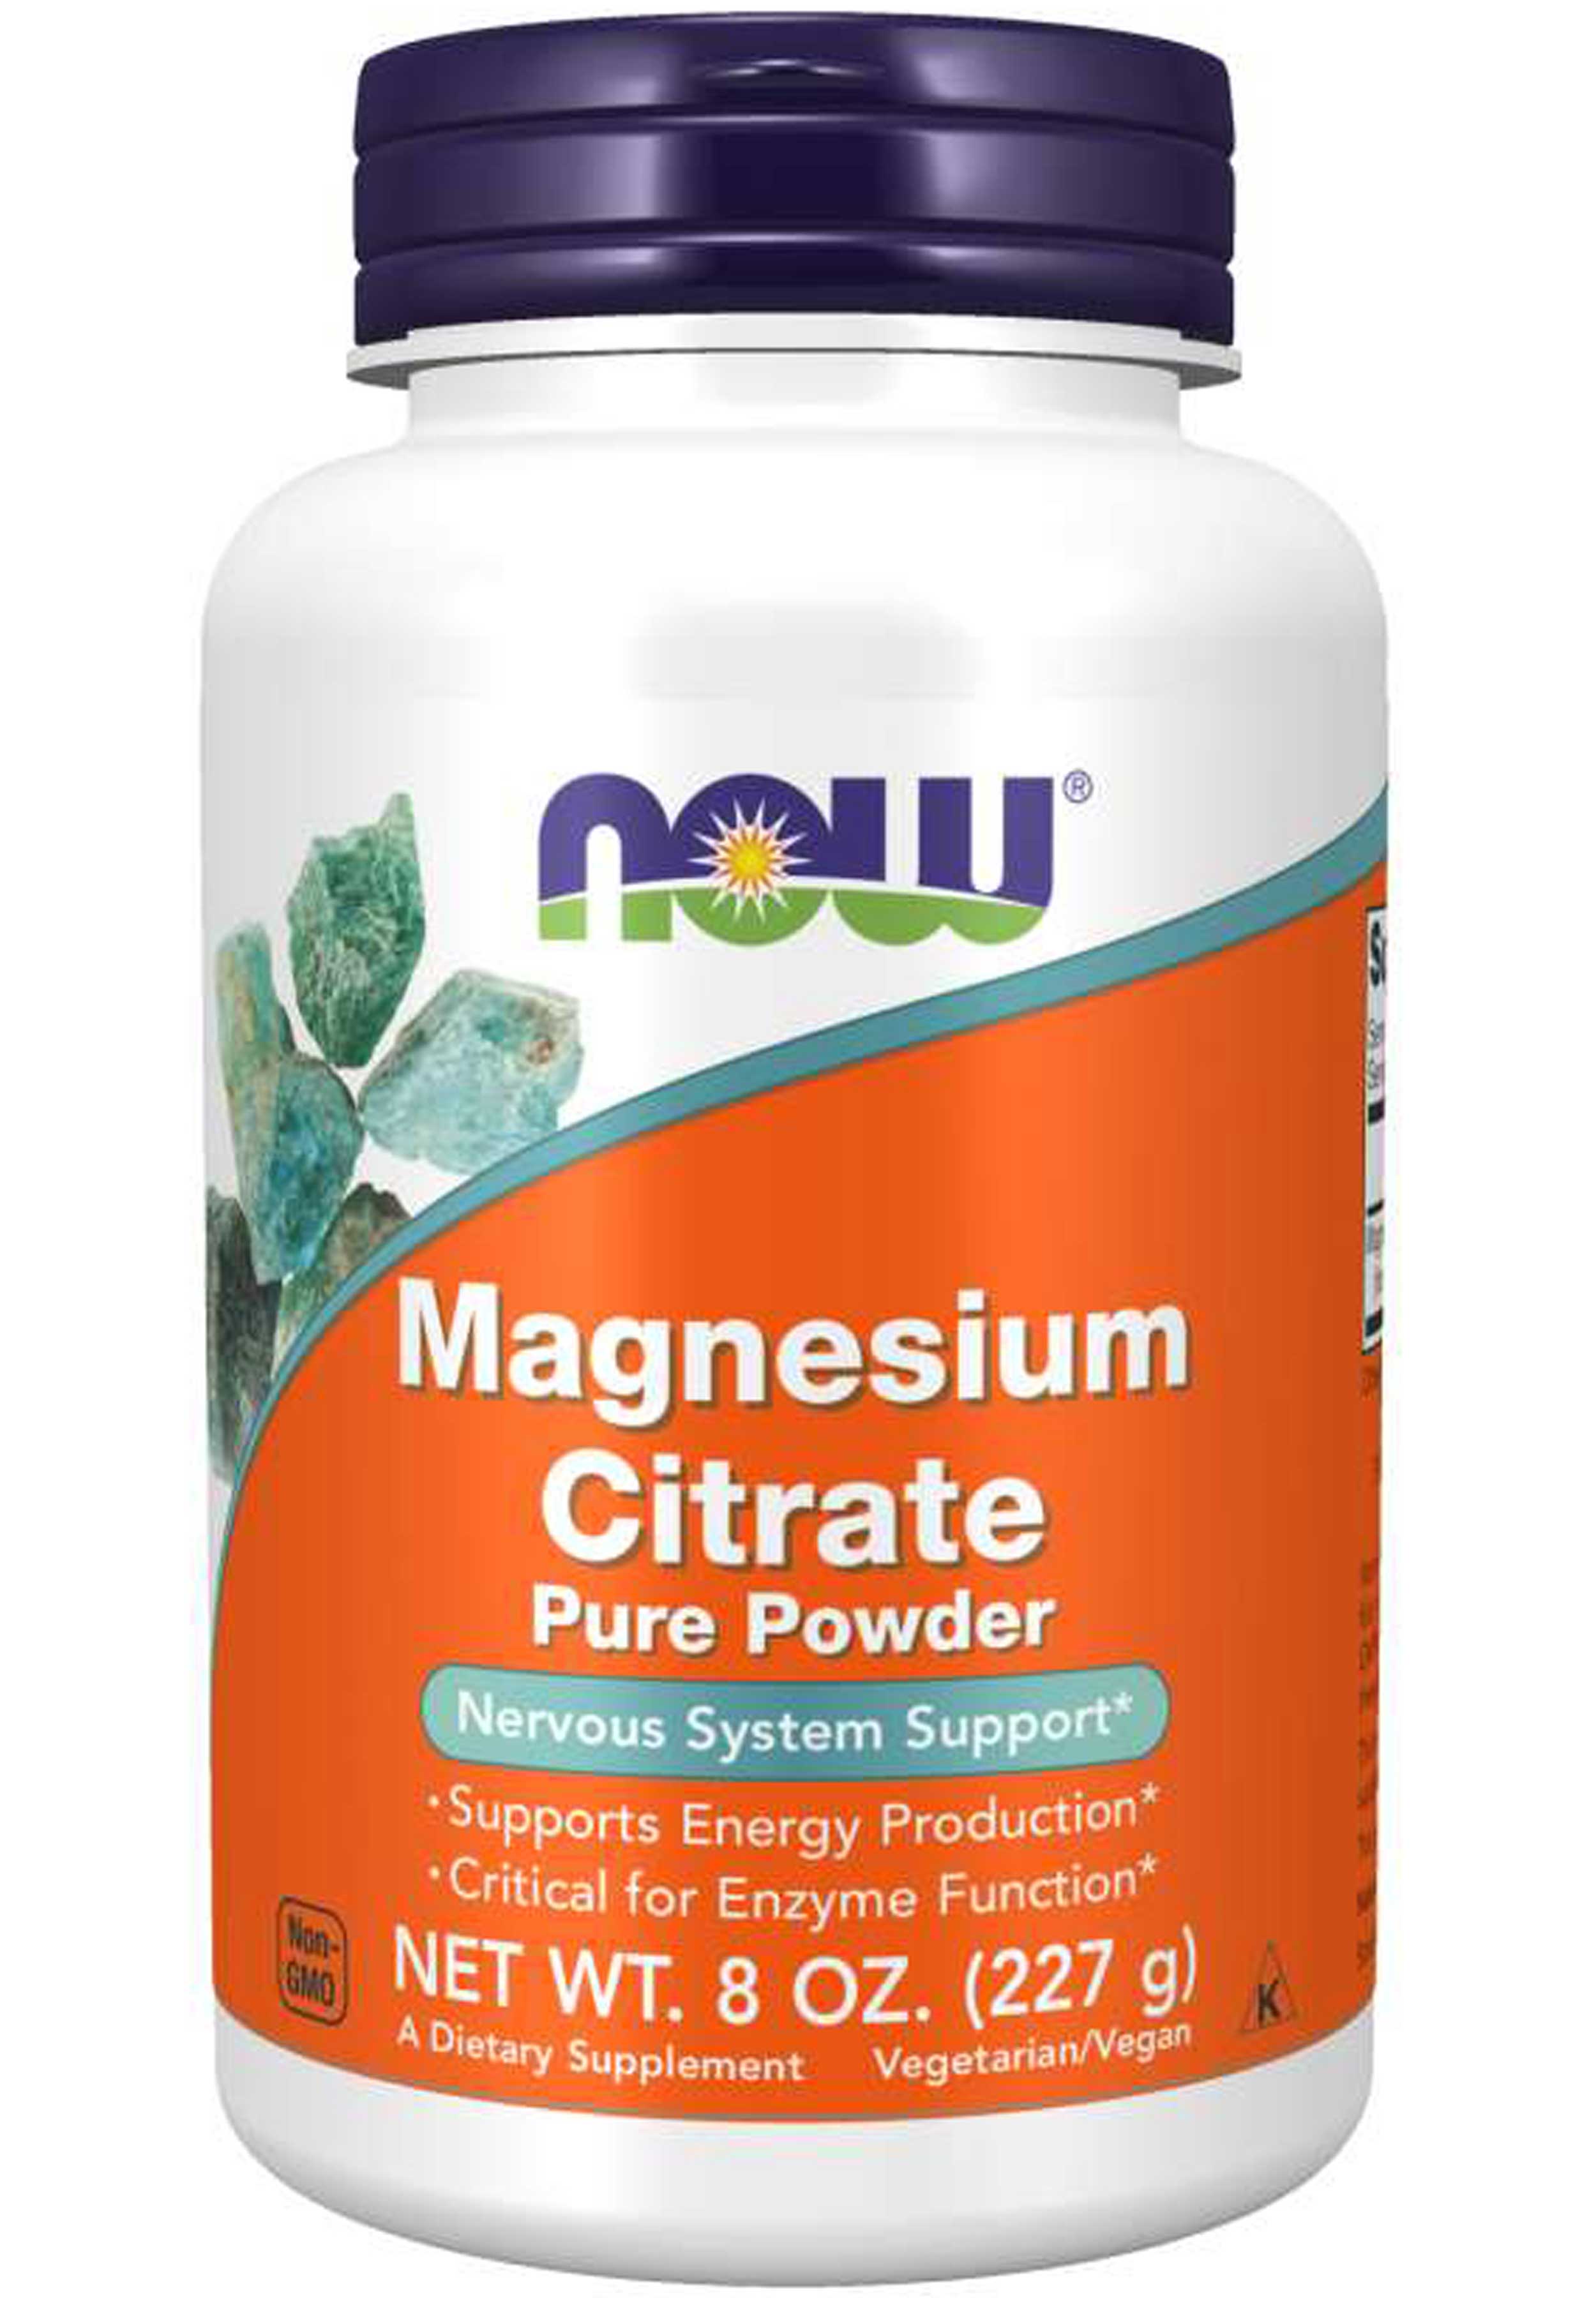 NOW Magnesium Citrate Pure Powder